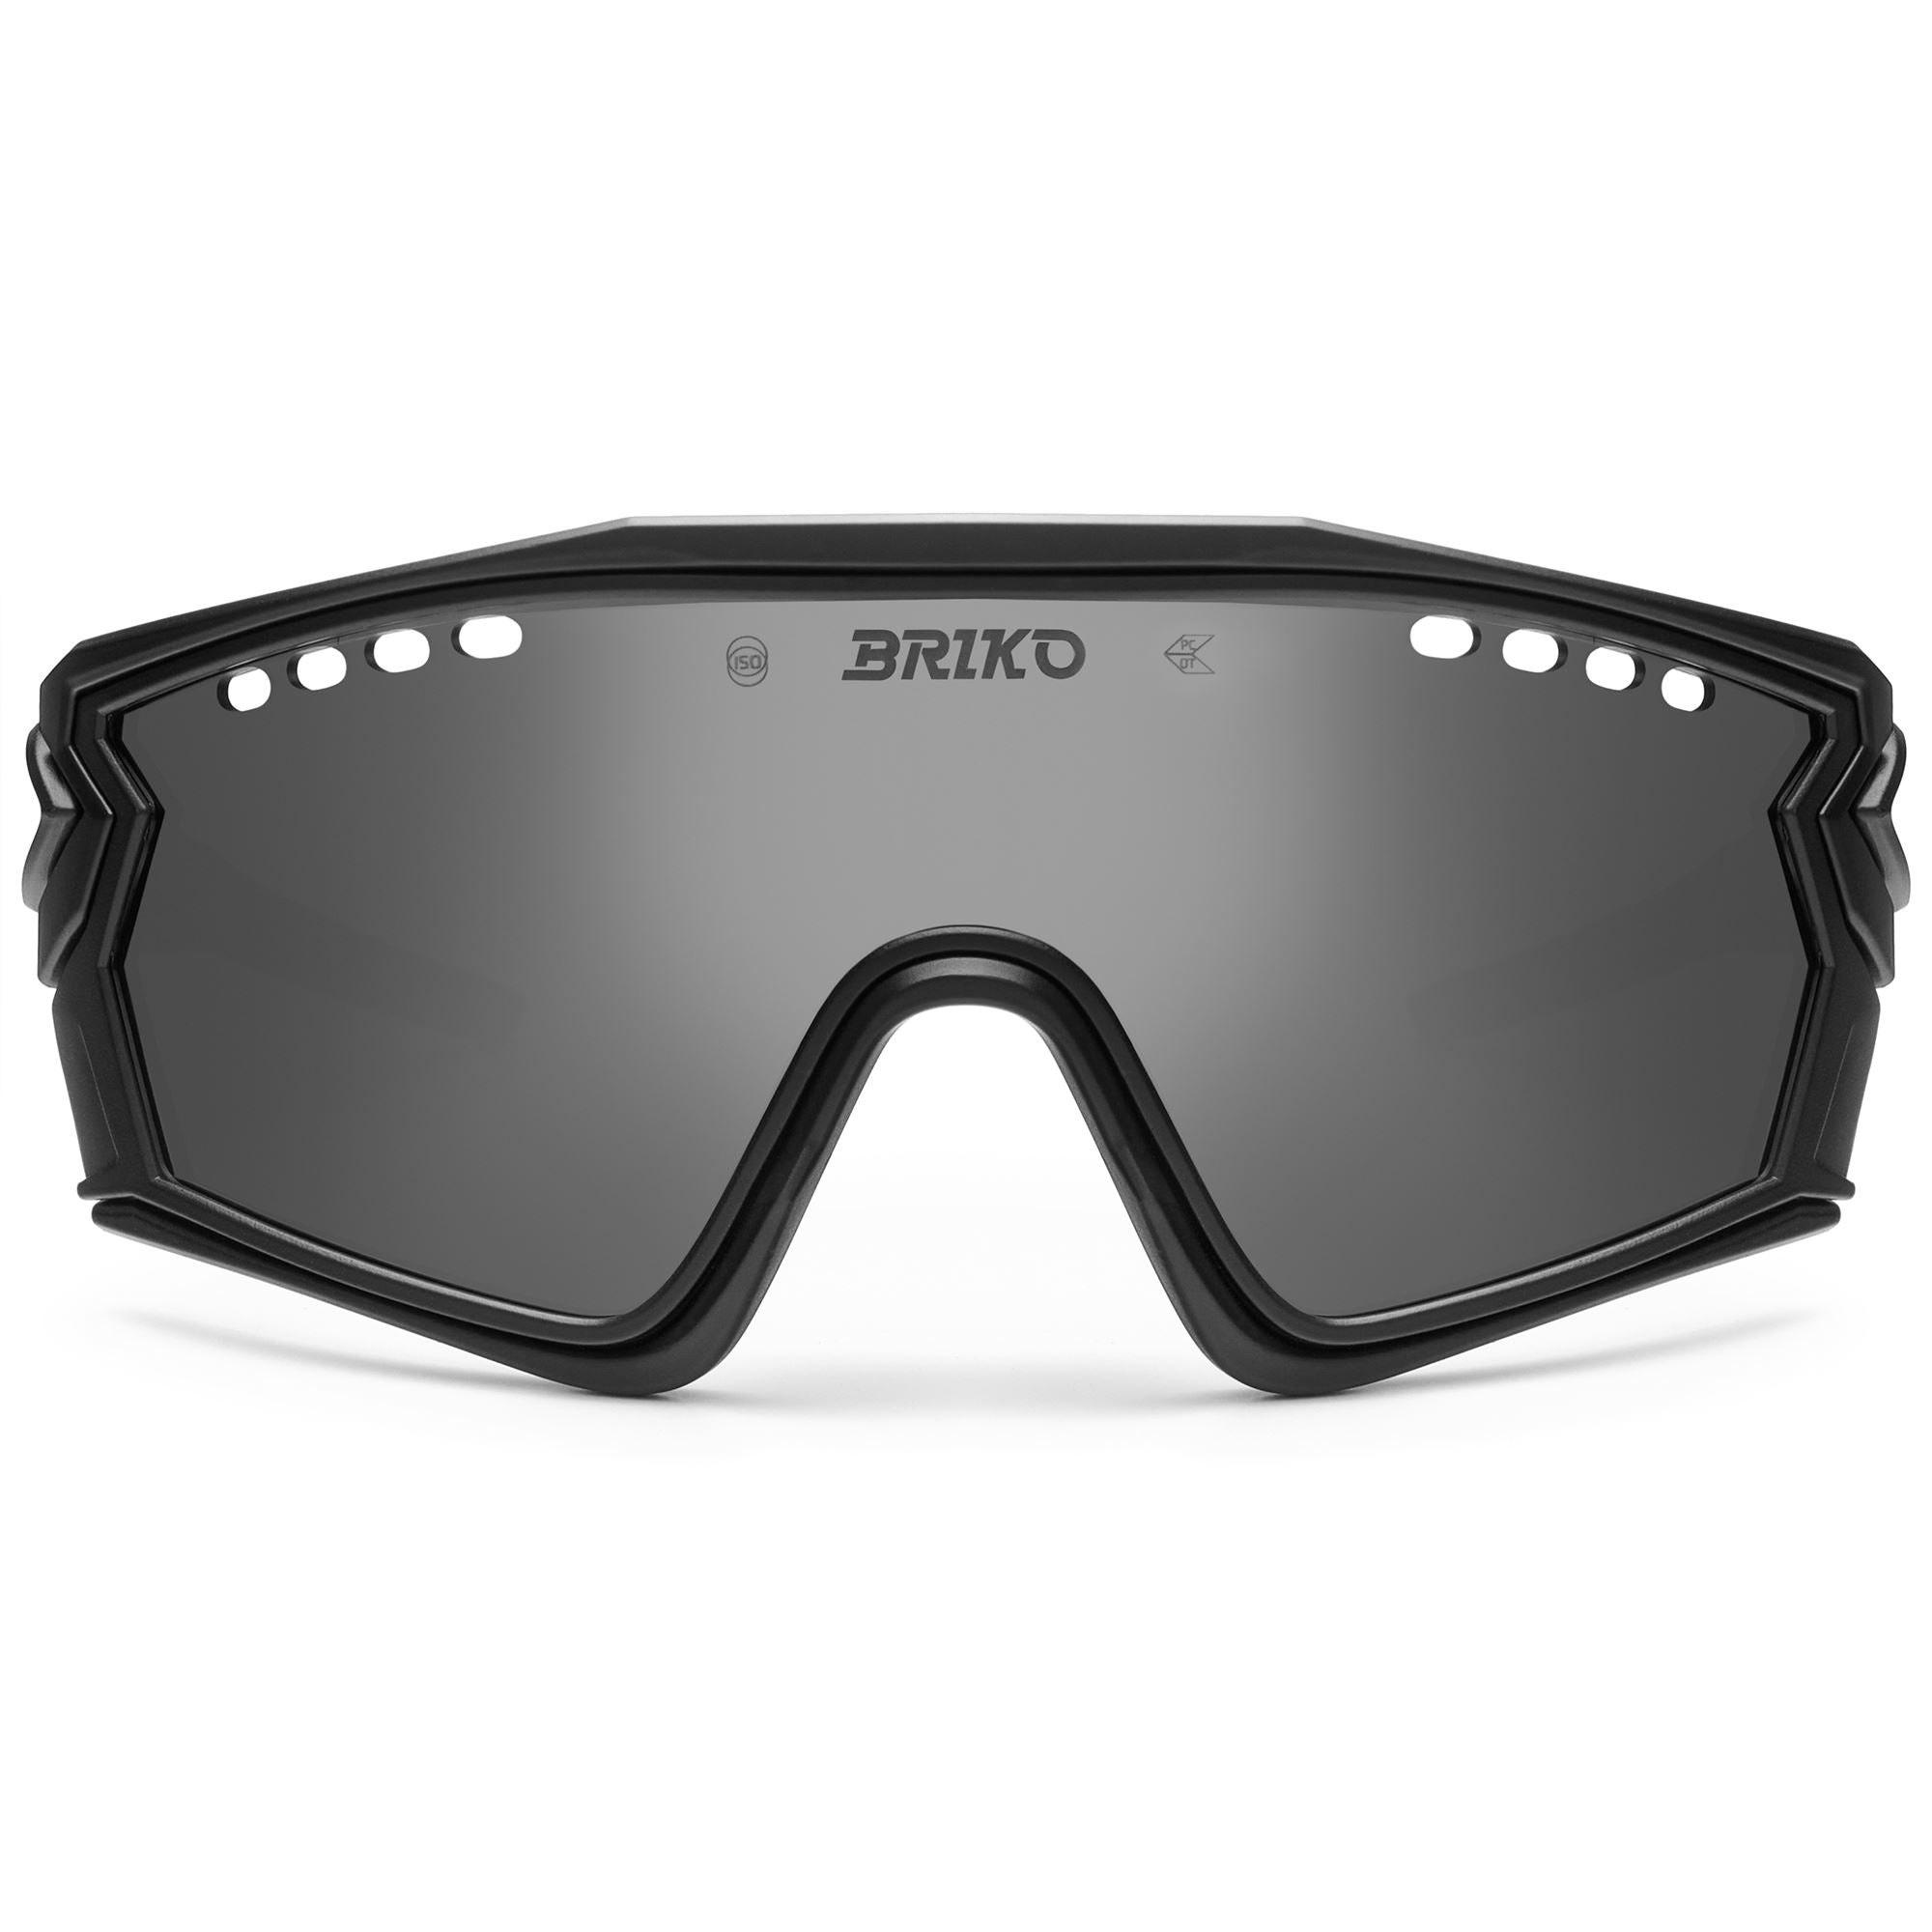 Eyewear new collection – Briko.com